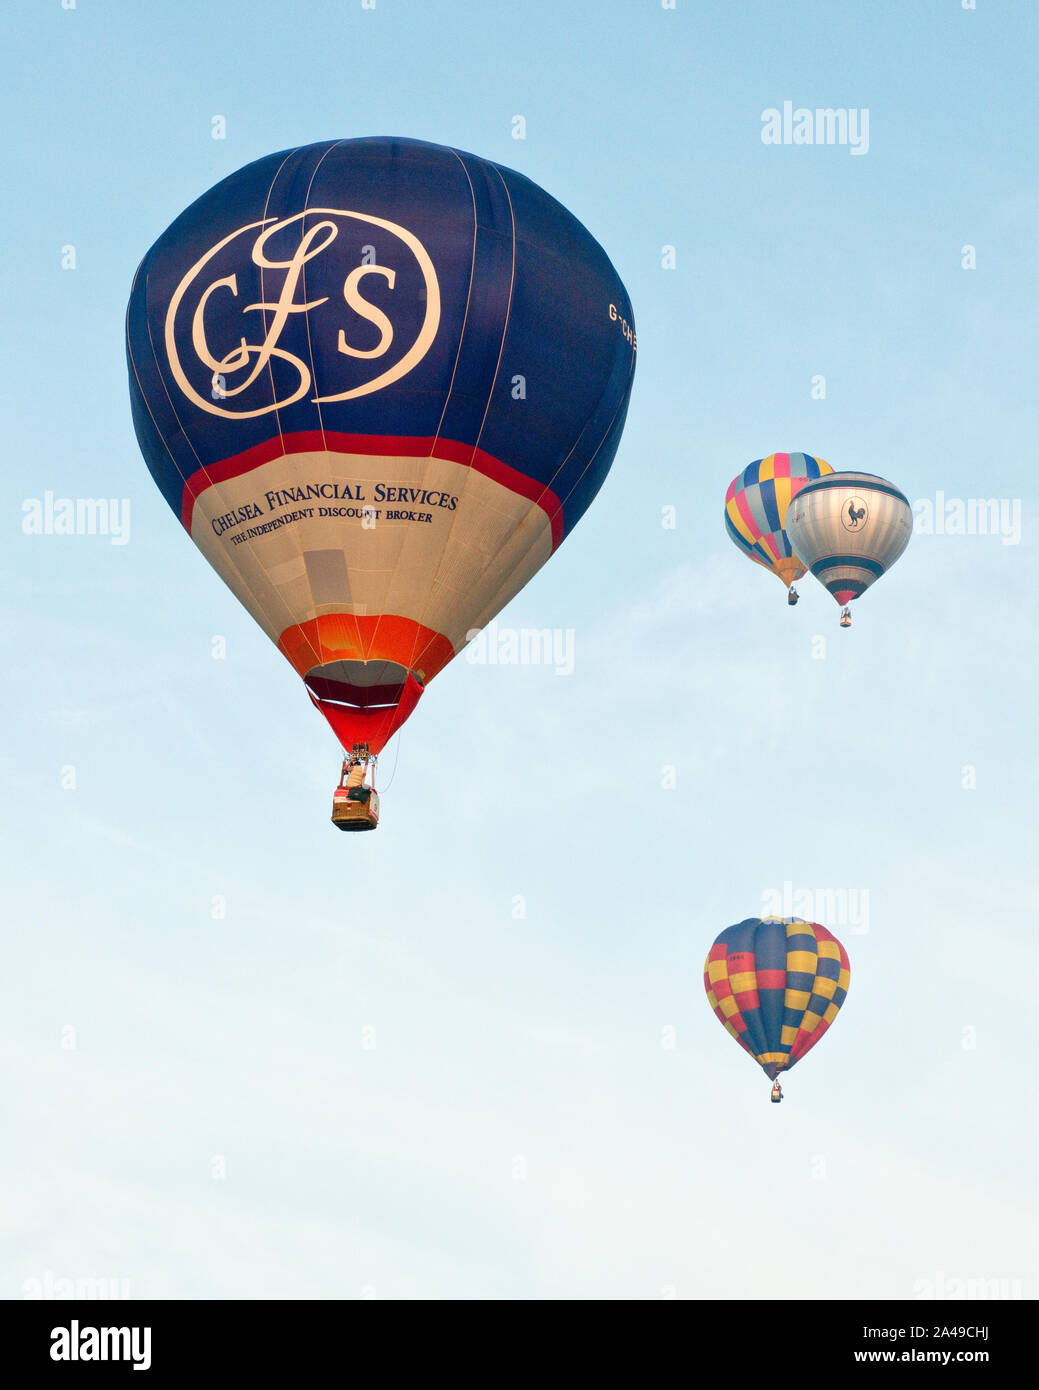 'Chelsea Financial Services' (CFS) hot air balloon. Bristol International Balloon Fiesta, England Stock Photo